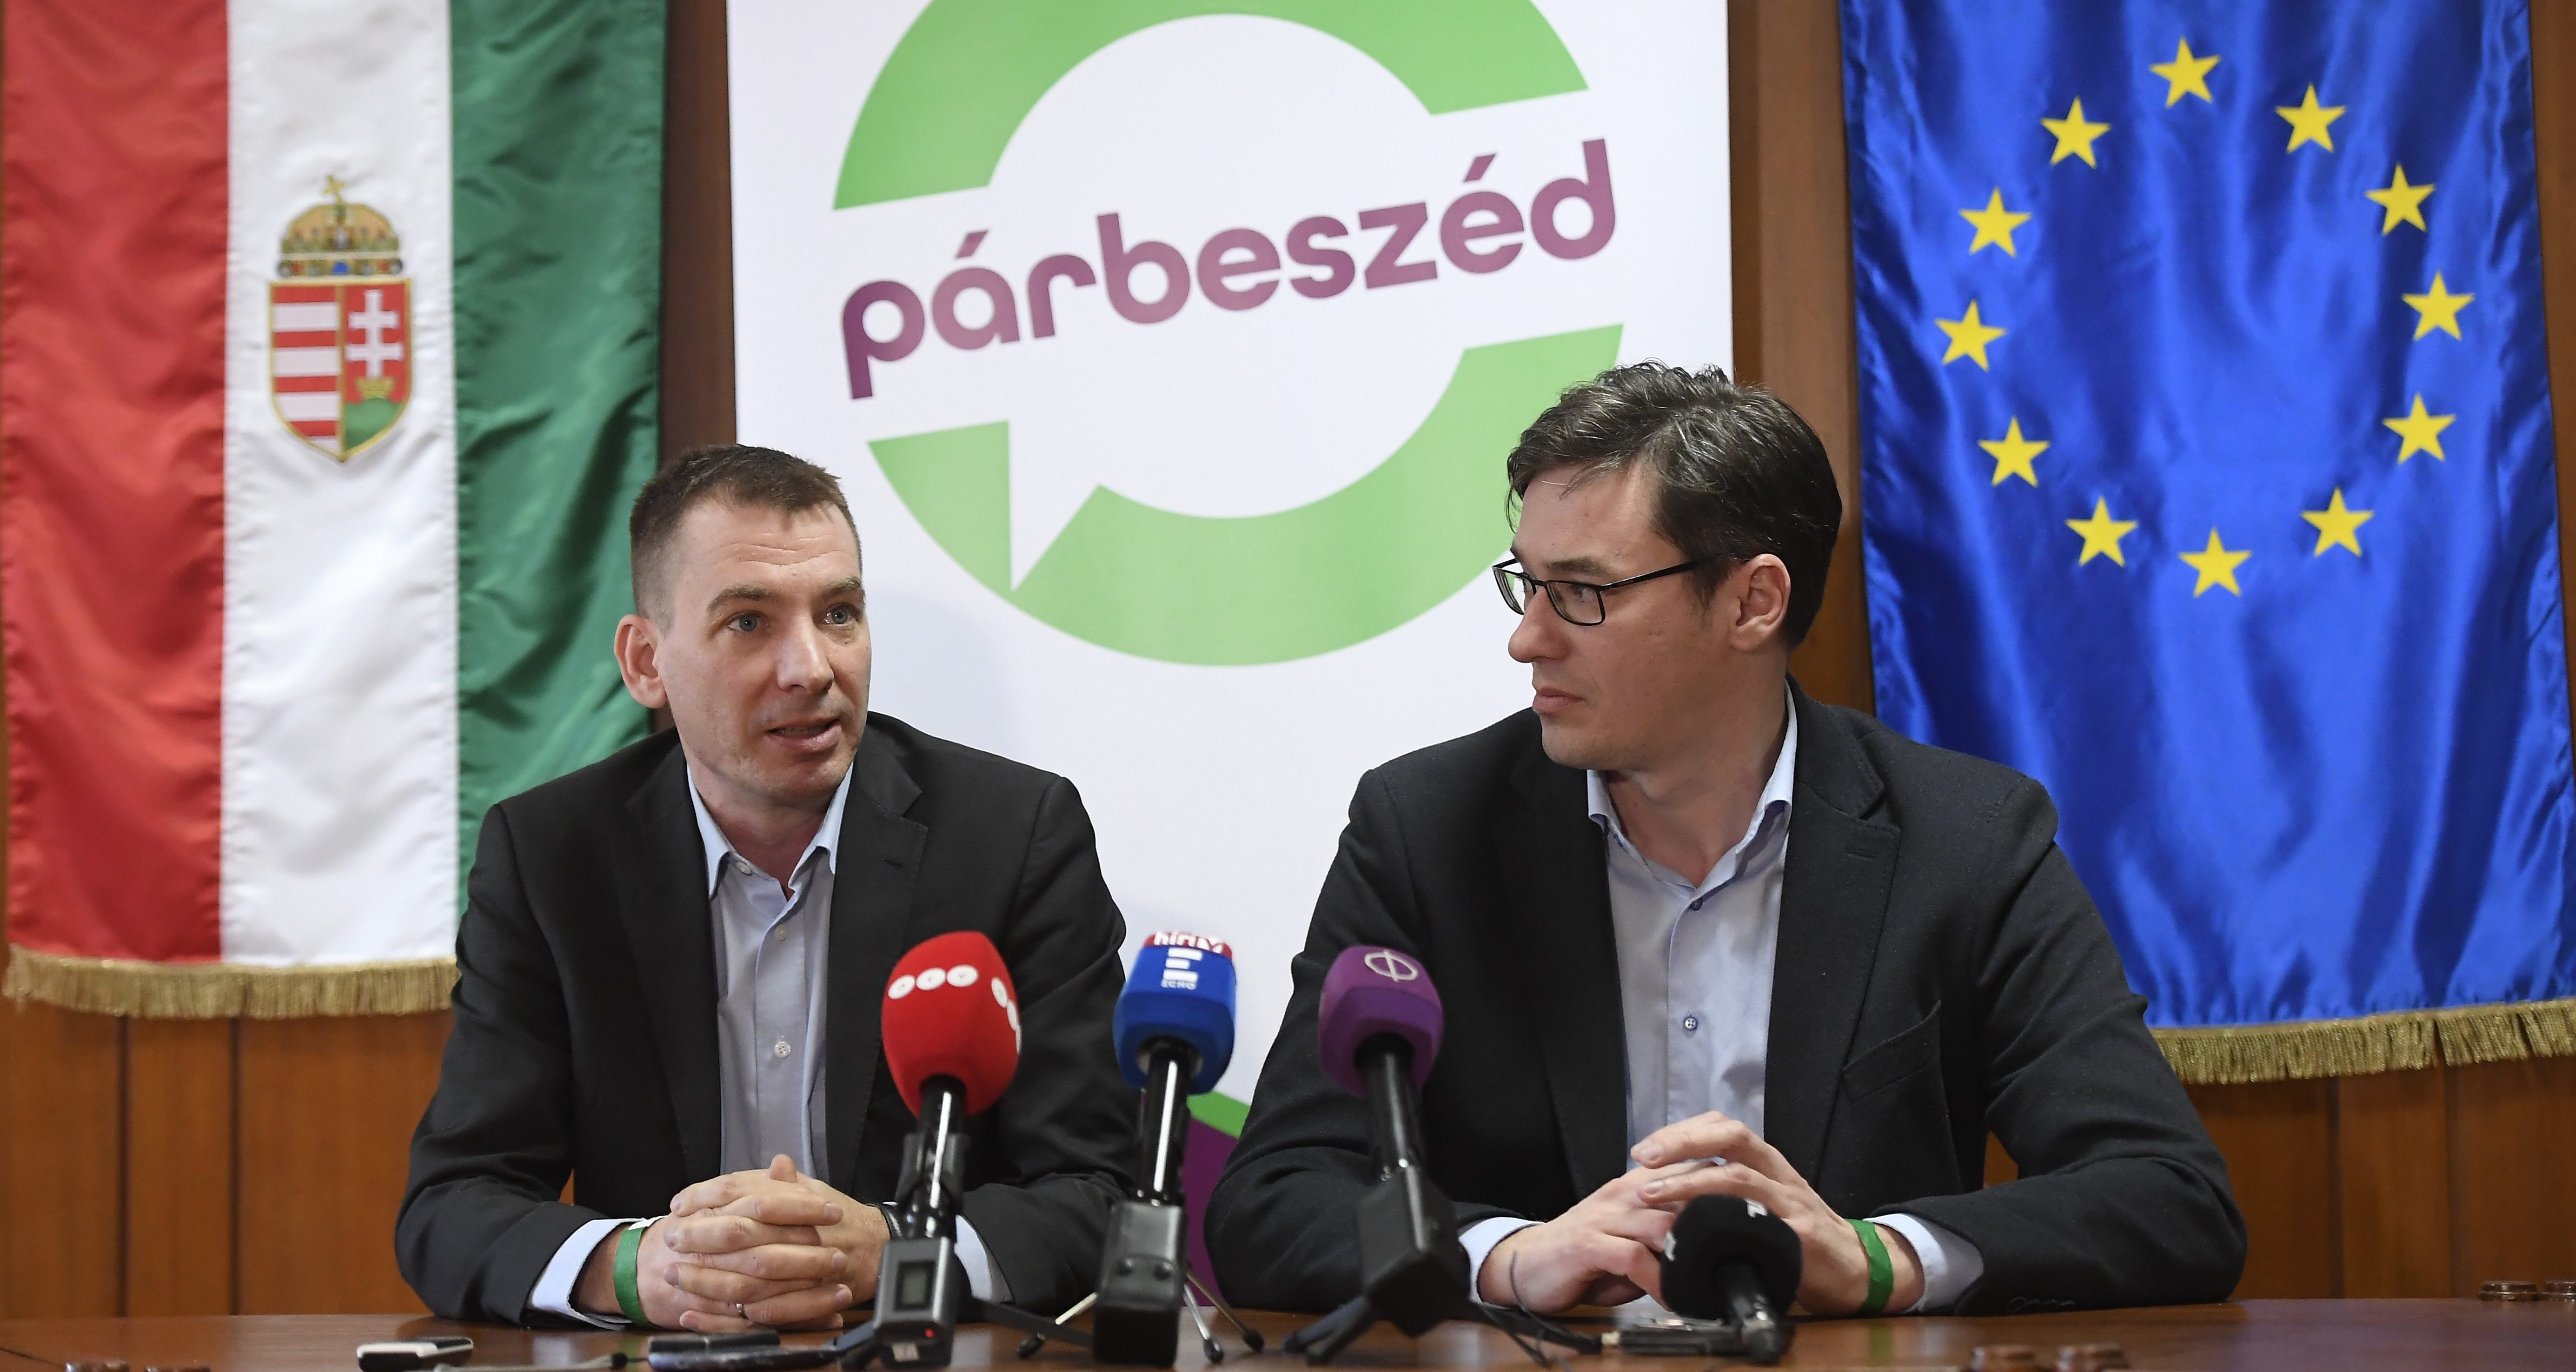 Jávor Karácsony 2019 年 EP 选举